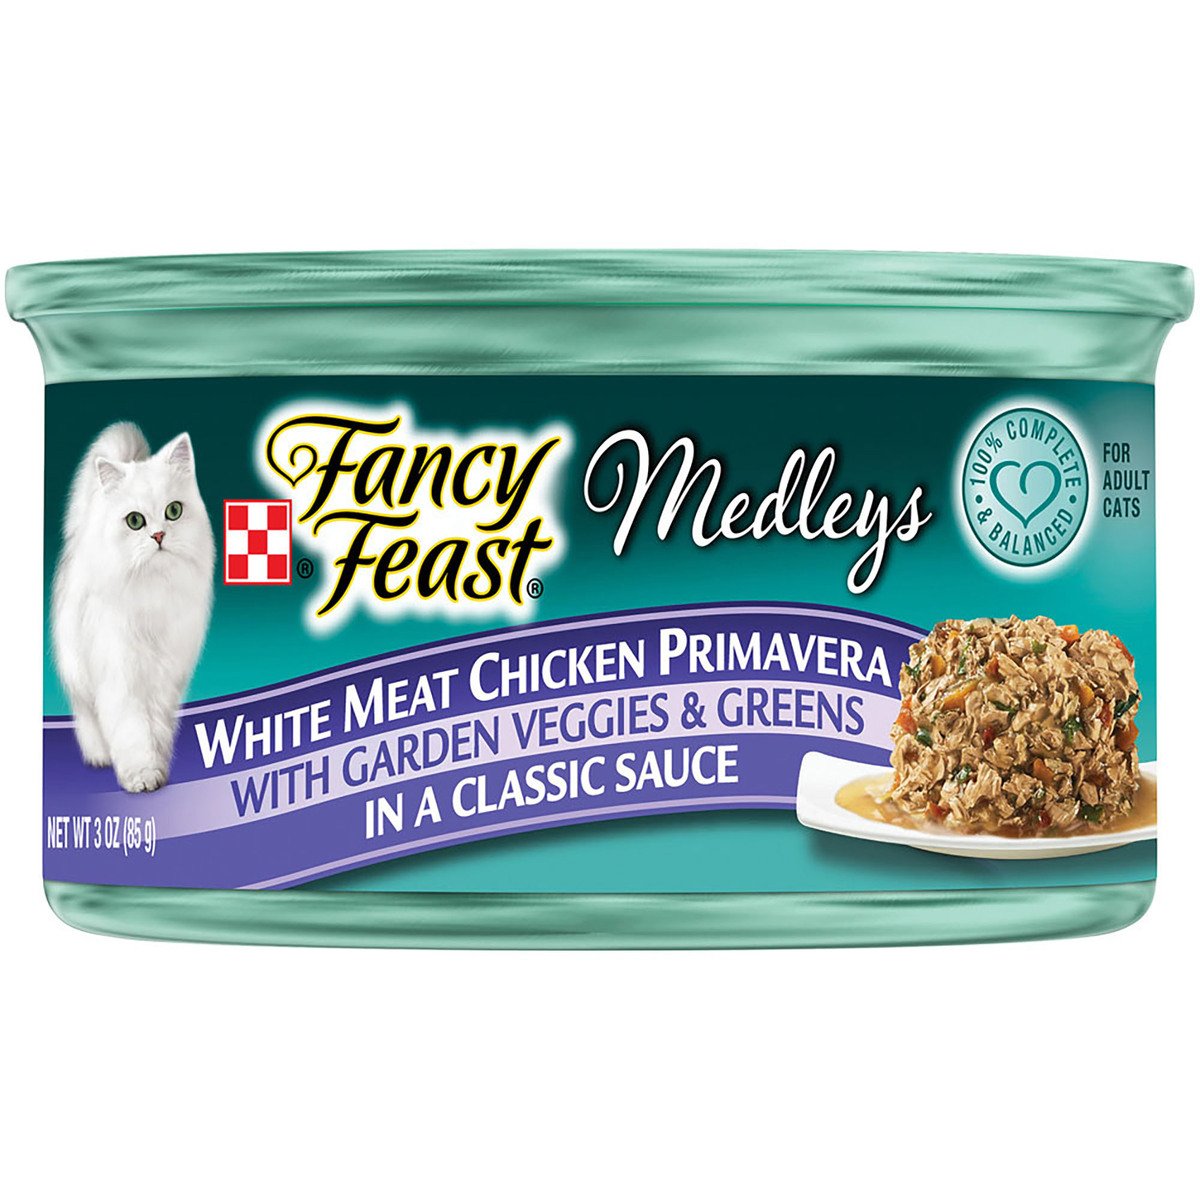 Purina Fancy Feast Medleys White Meat Chicken Primavera Wet Cat Food 85 g